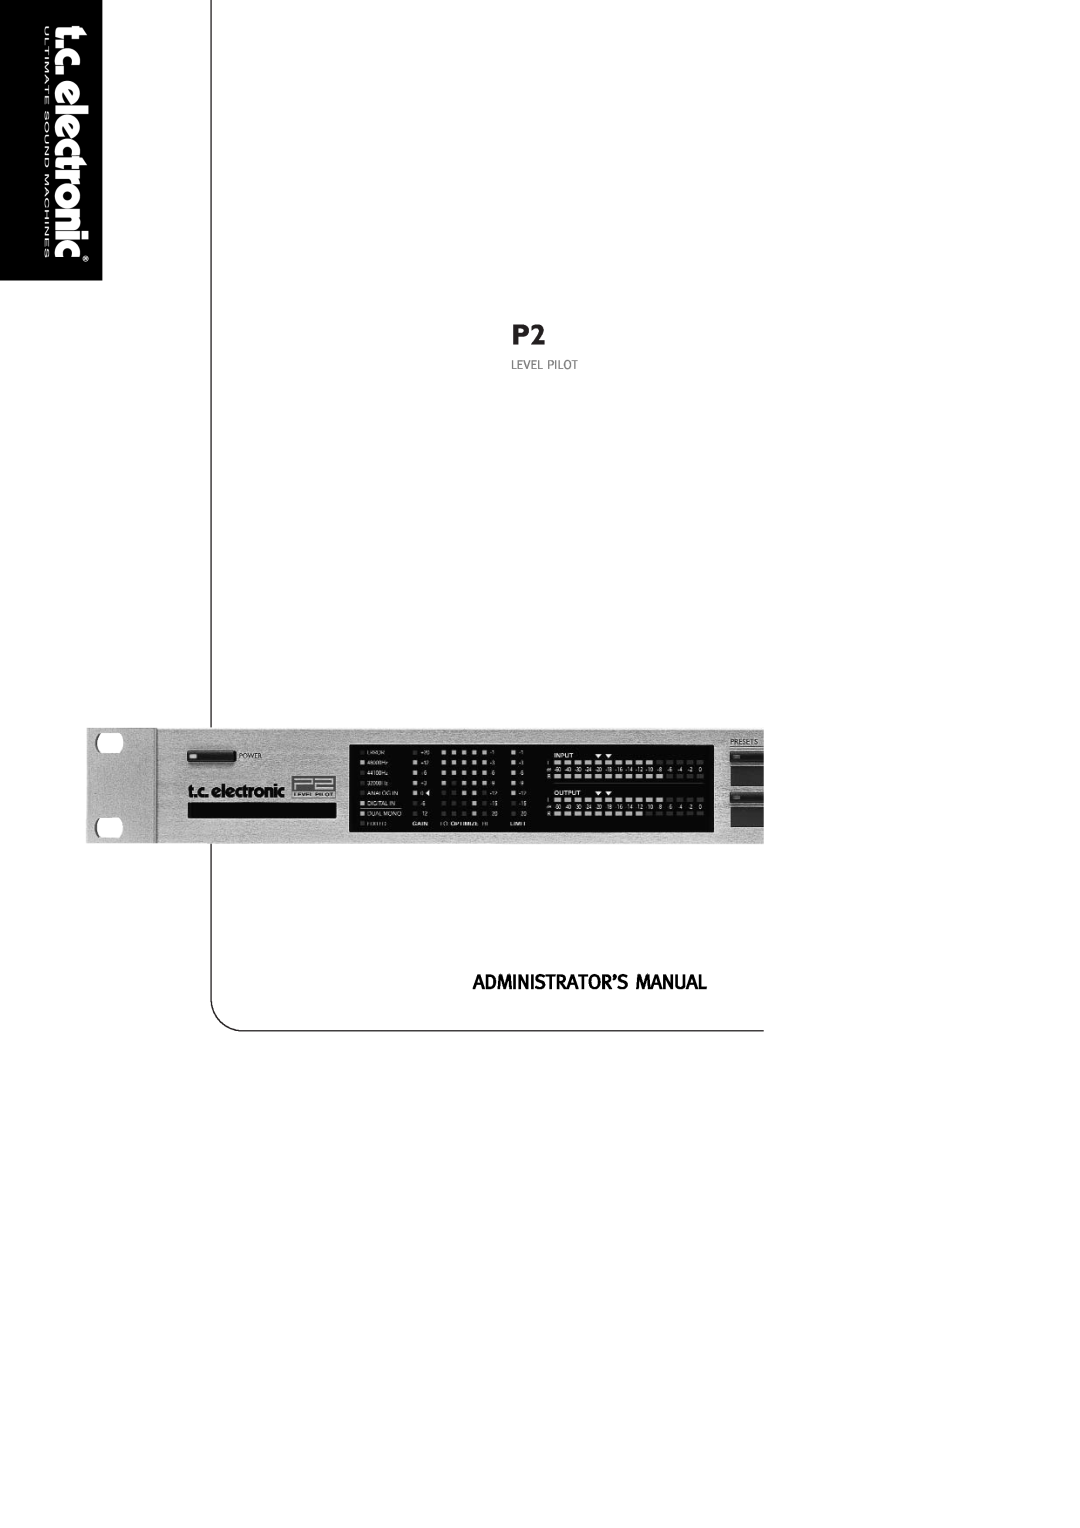 TC electronic SDN BHD P2 manual Administrator’S Manual, Level Pilot 